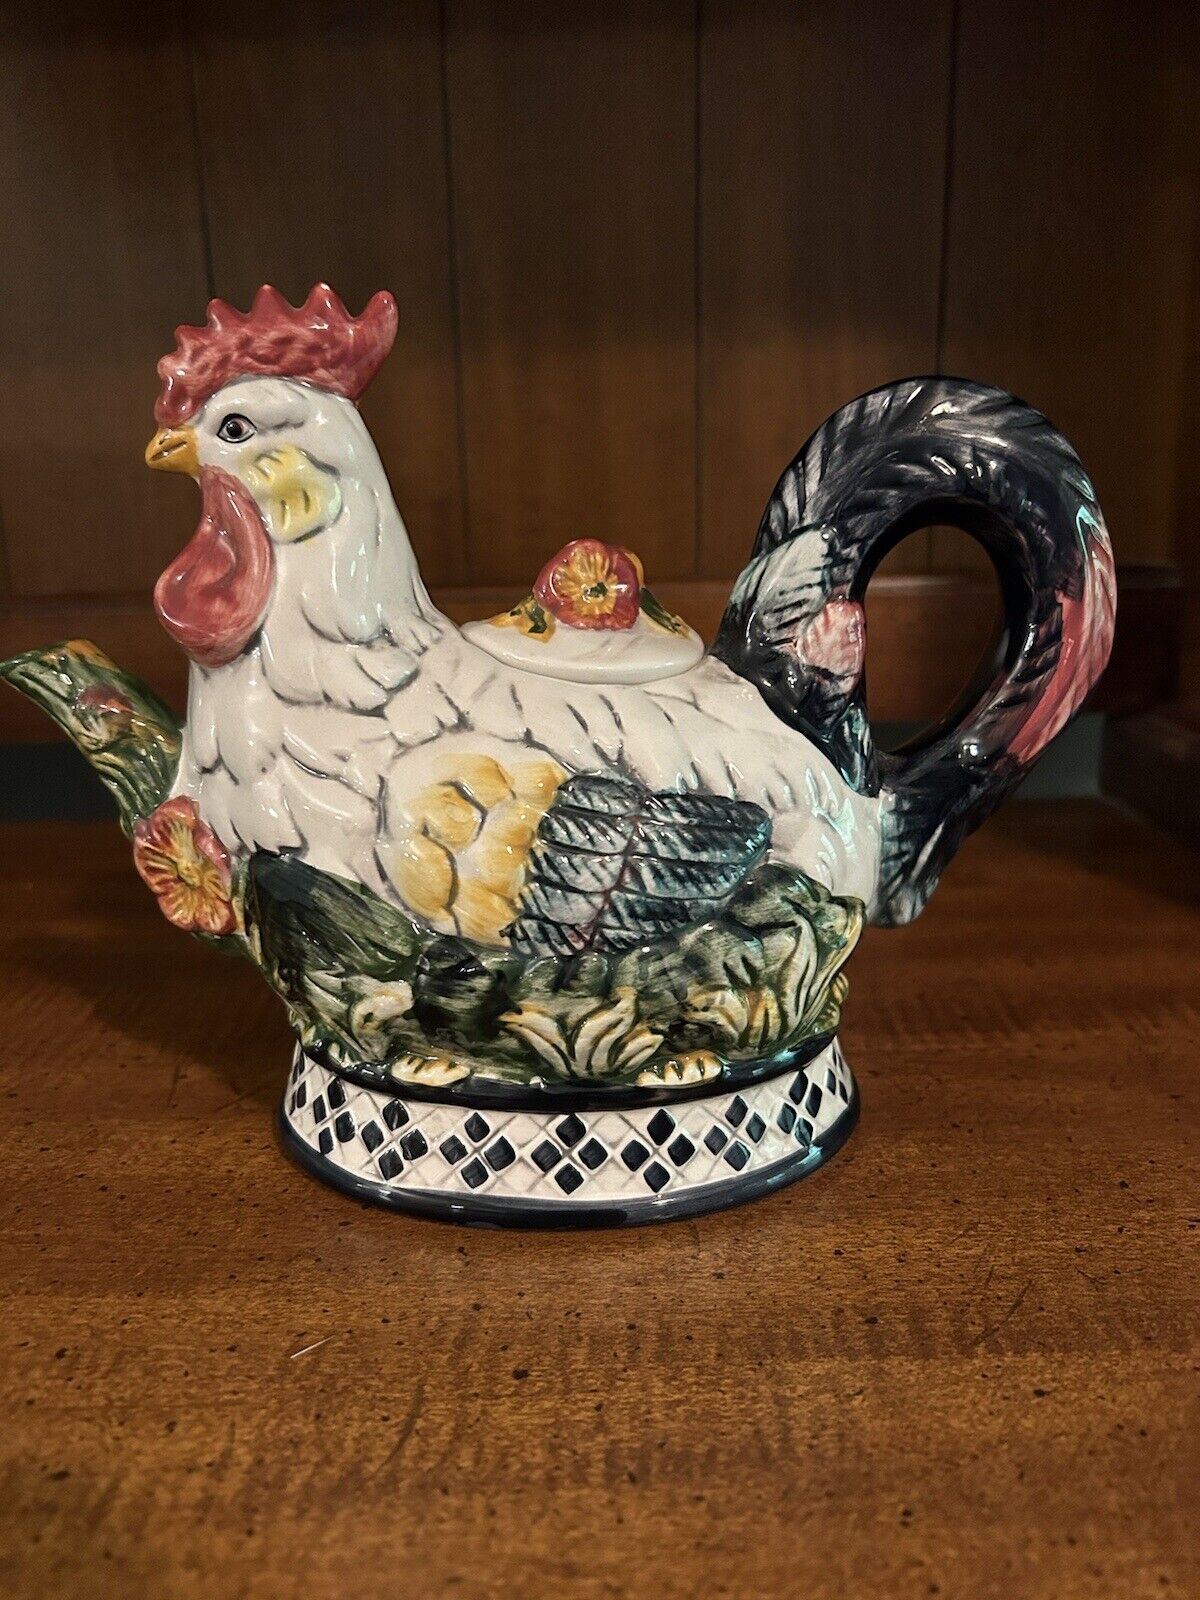 Vintage Rooster Teapot Farmhouse-Country-Rooster Decor CBK LTD, LLC 1998